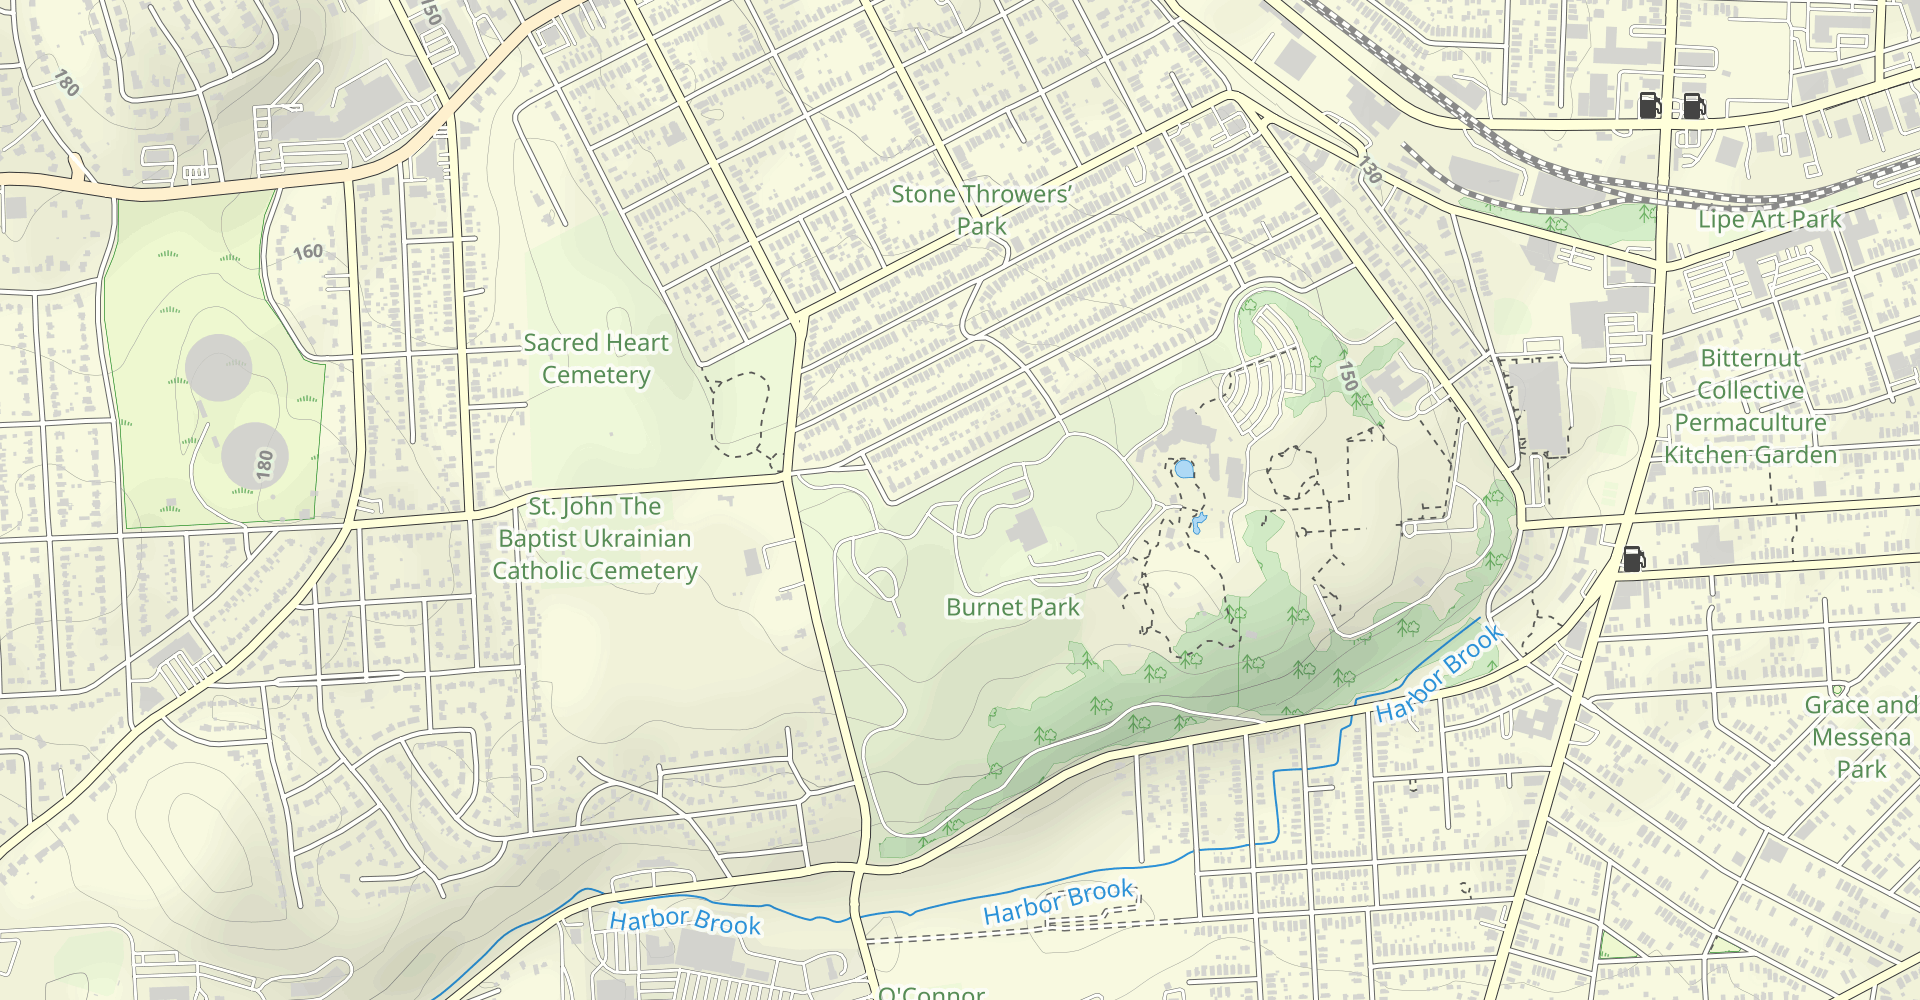 Burnet Park Loop